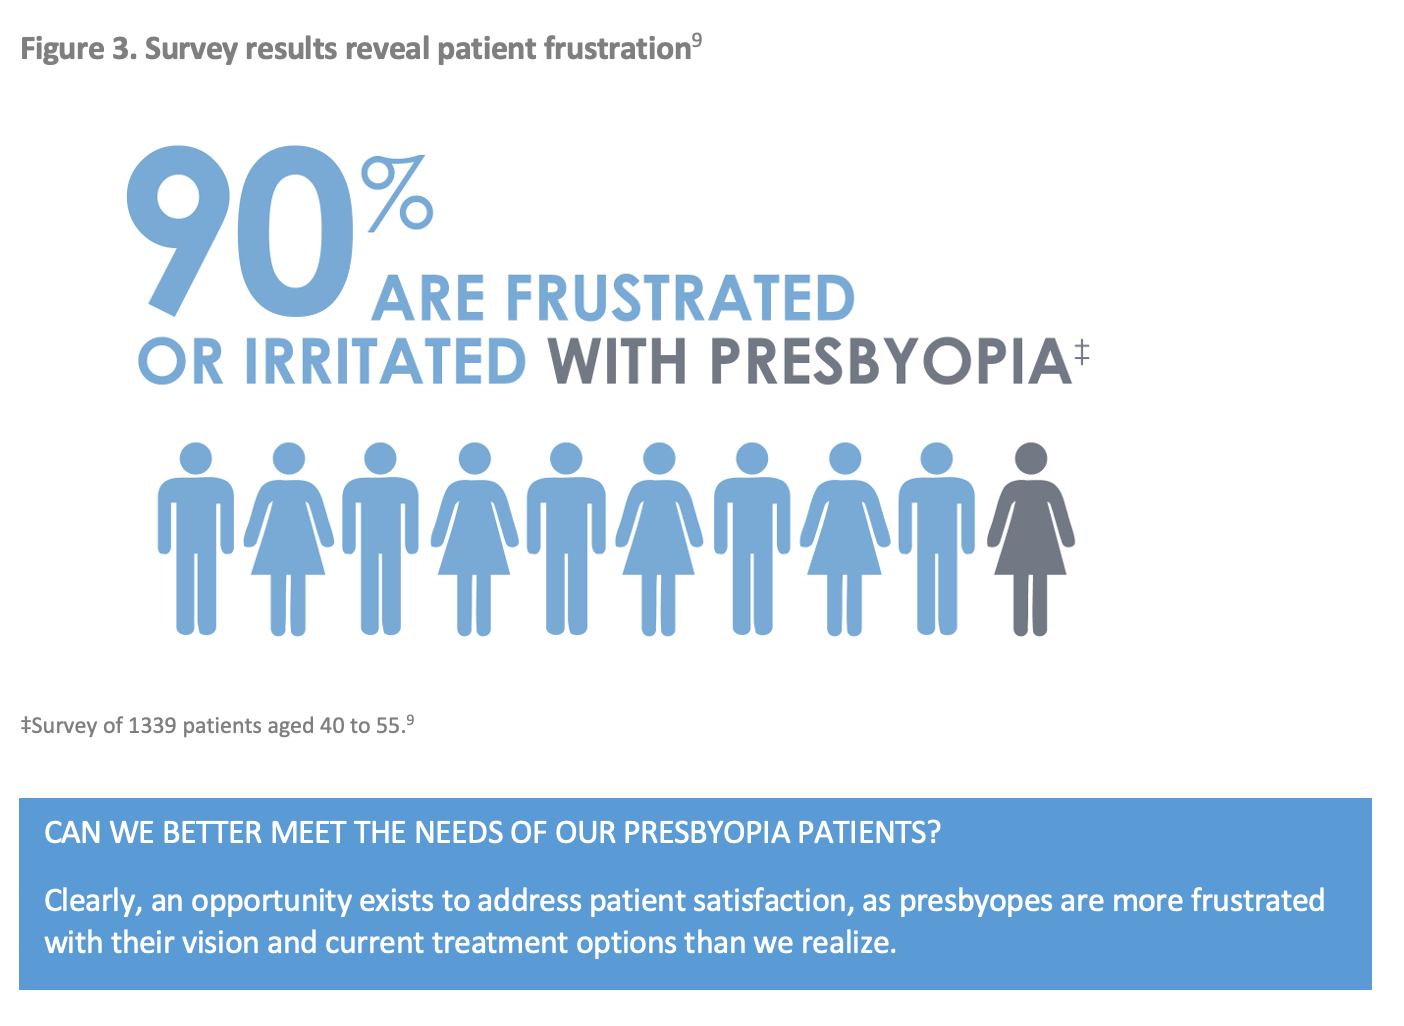 presbyopia survey results reveal patient frustration